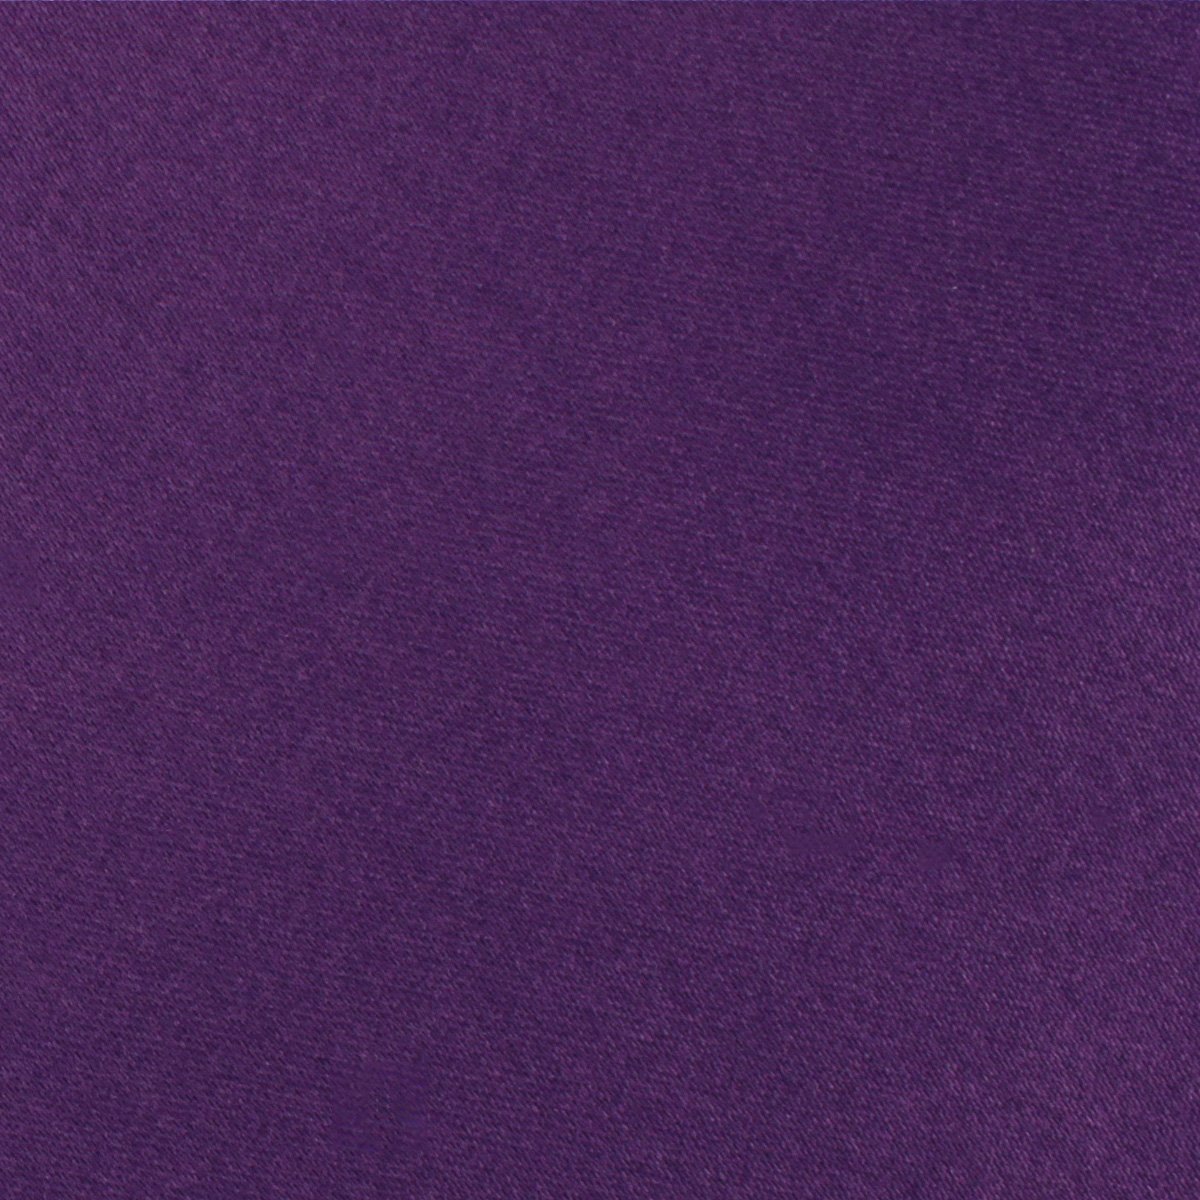 Eggplant Purple Satin Pocket Square Fabric